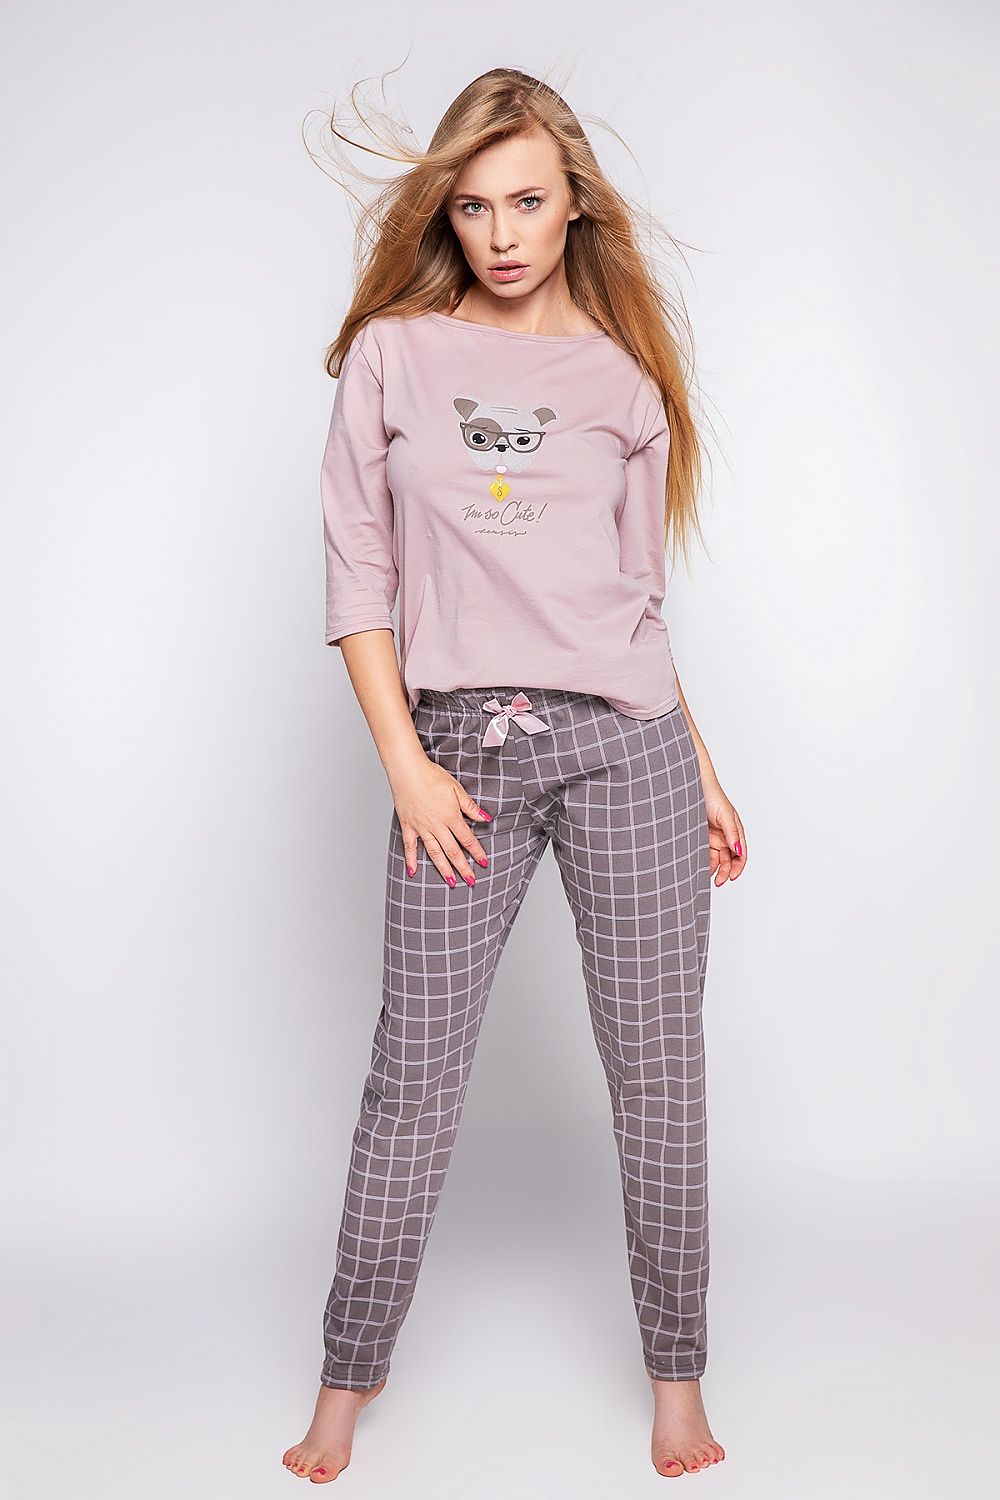 Pyjama model 146944 Sensis Women`s Pyjamas, Sleepwear Sets Wholesale ...